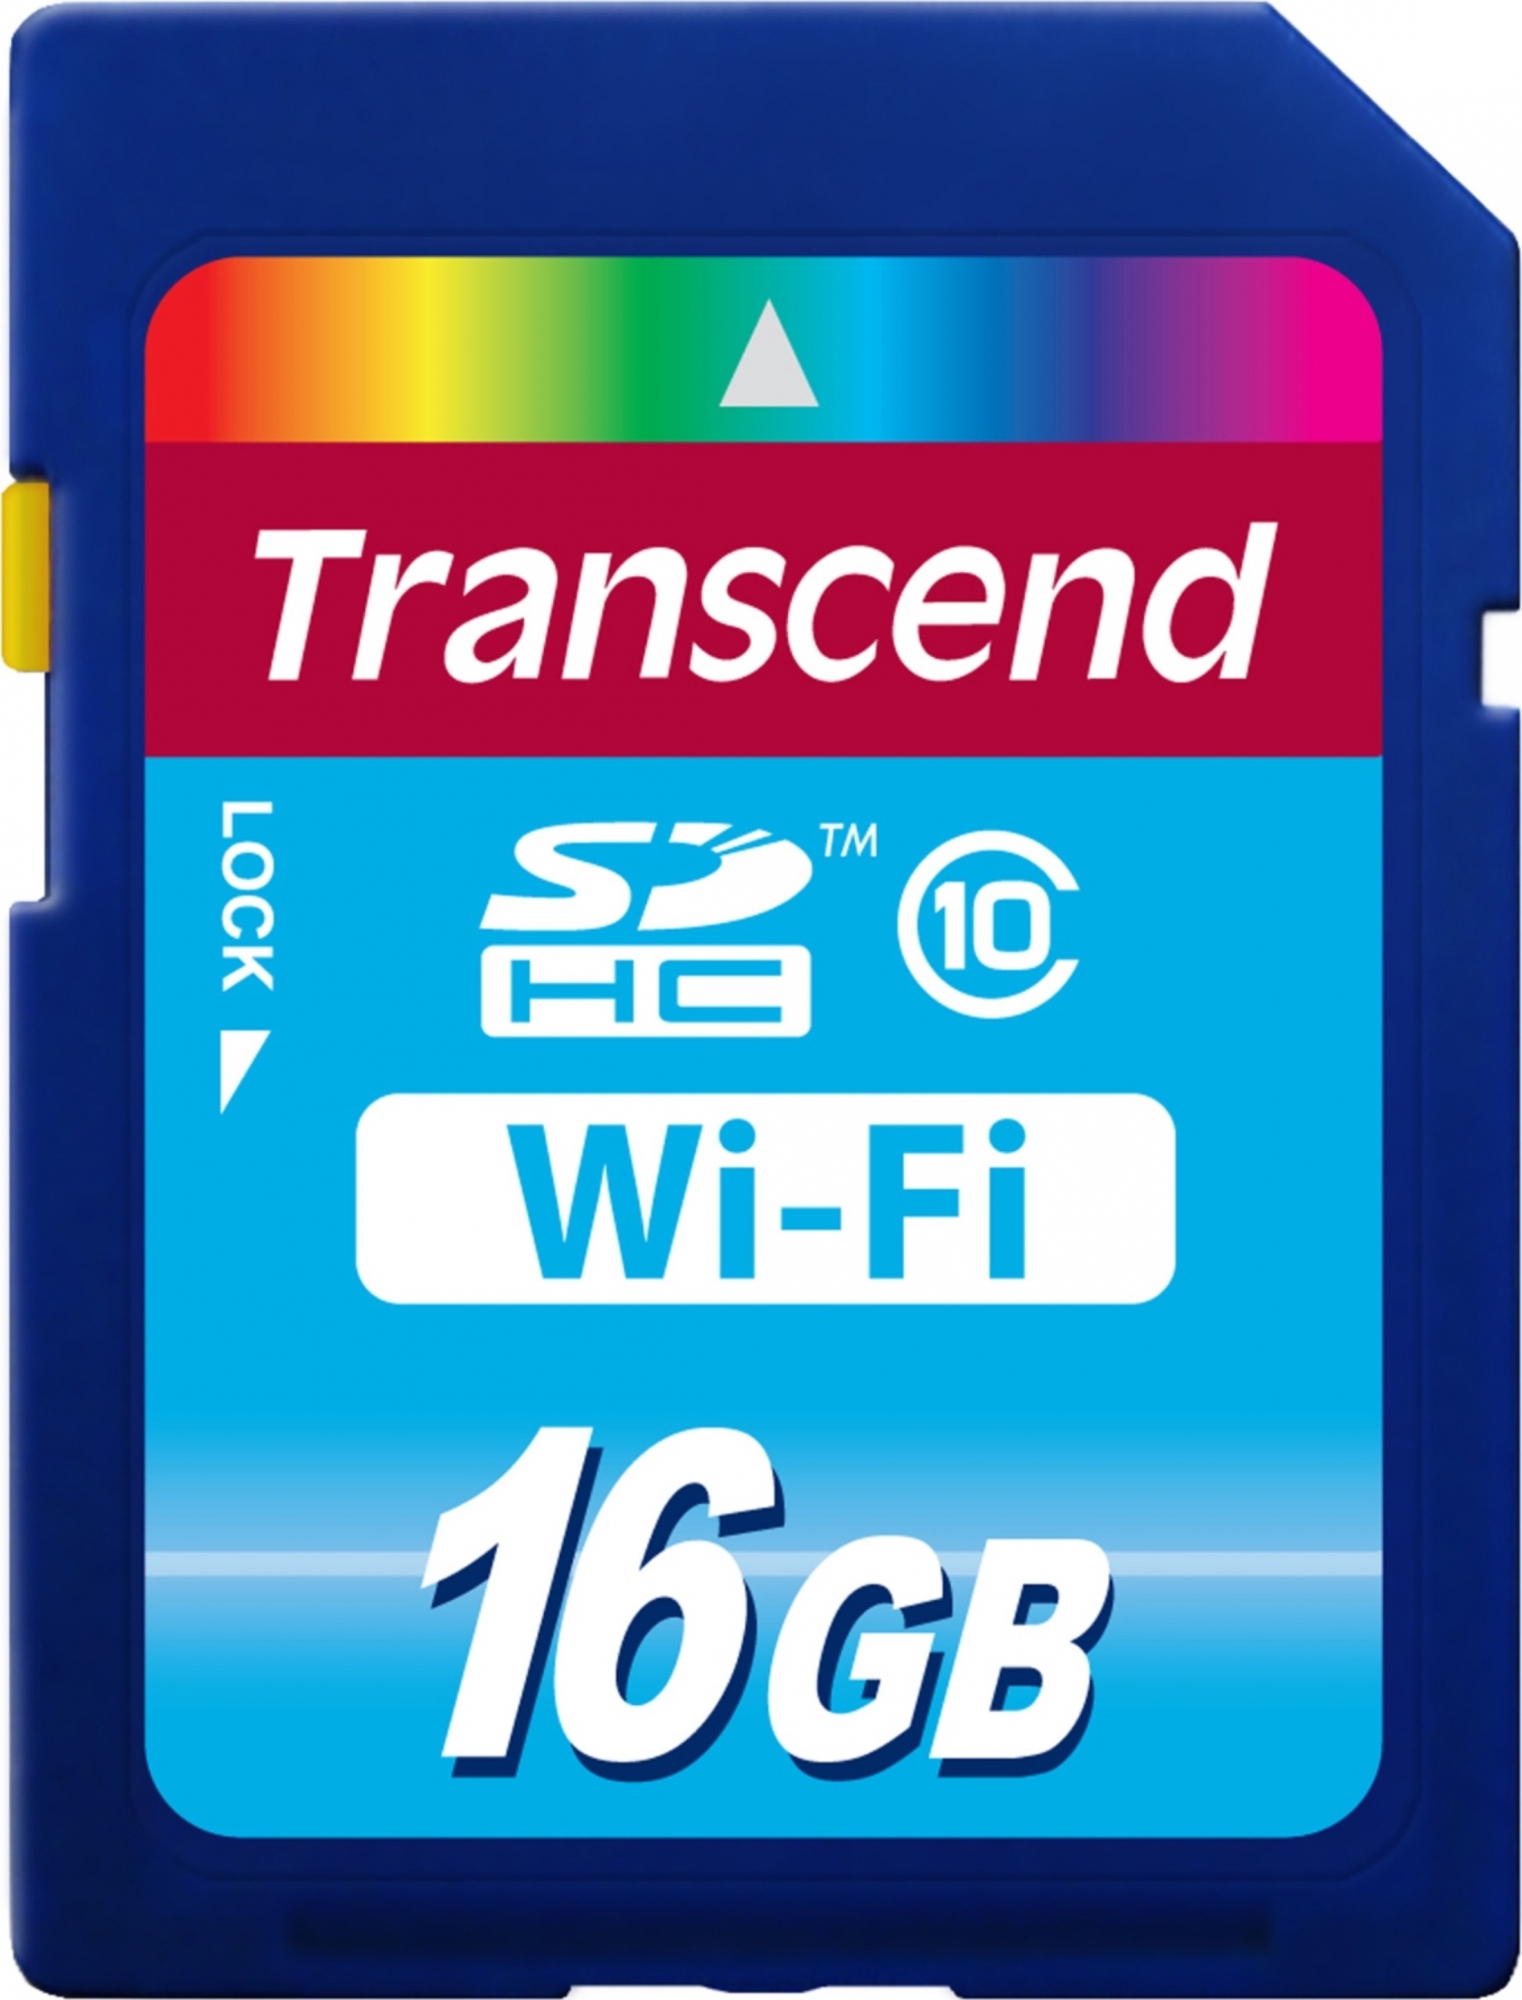 Память sd sdhc. Transcend Wi-Fi SD 32gb. Transcend SDHC 32 GB class 10. Transcend 32gb SDHC. Transcend SD Card 32gb.